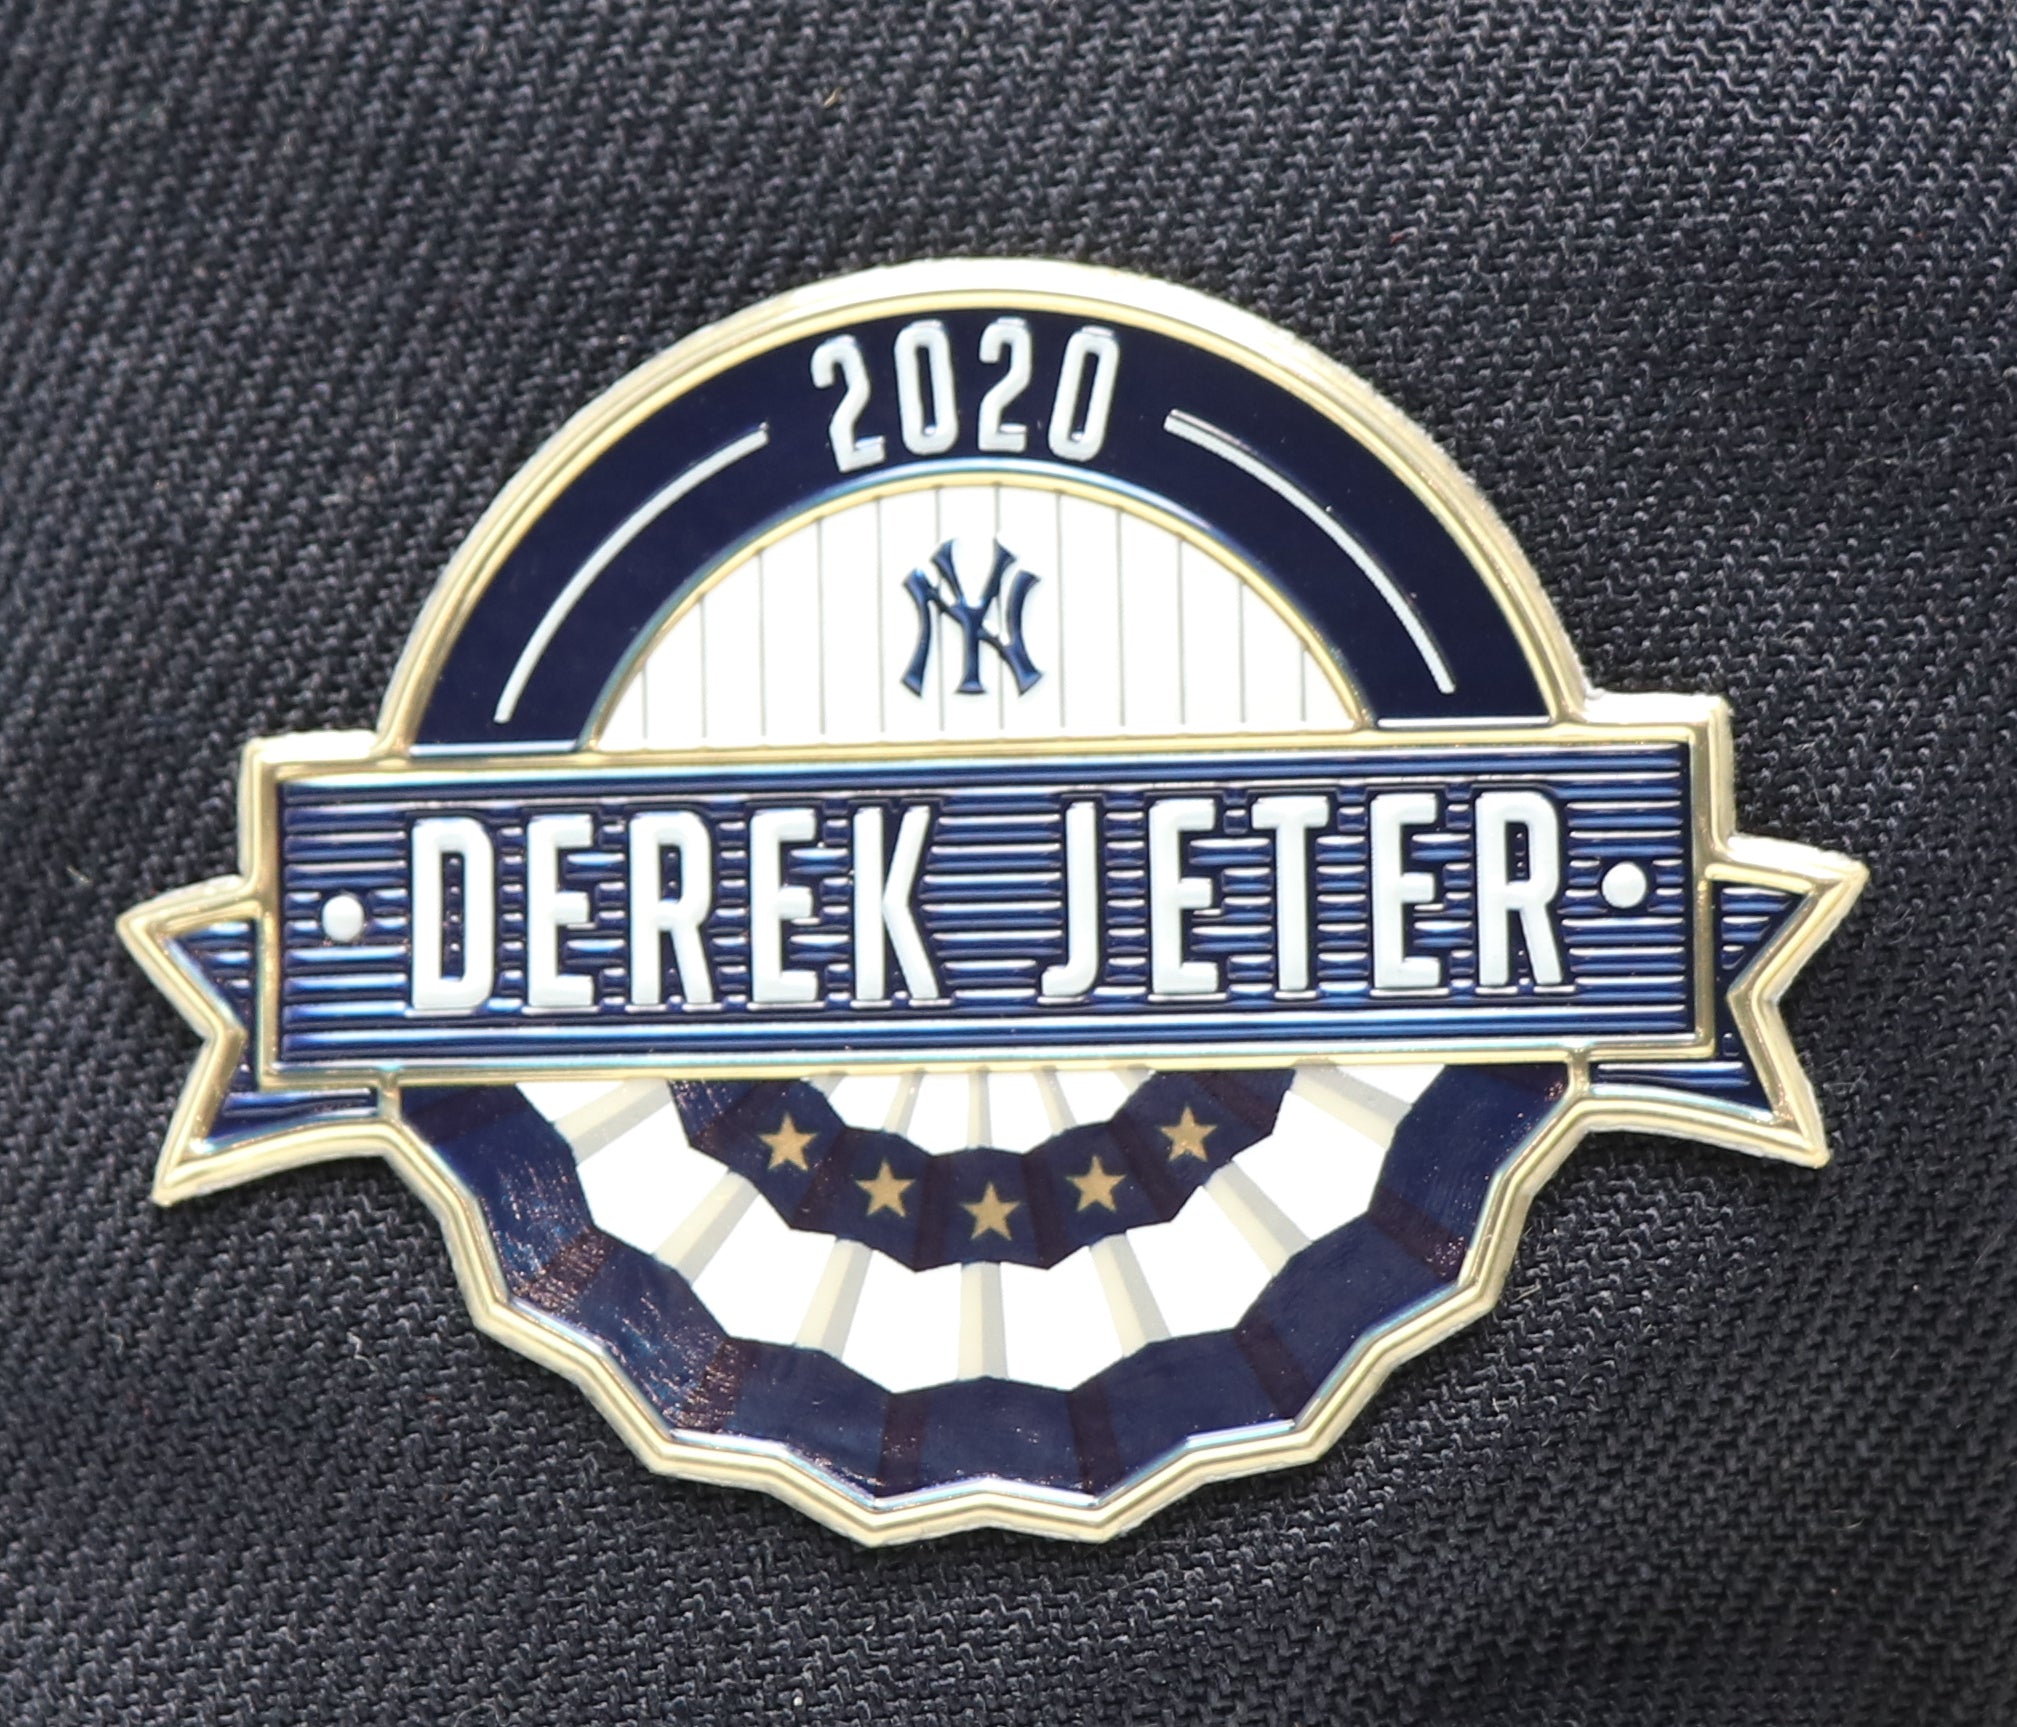 NEW YORK YANKEES "DEREK JETER #2" NEW ERA 59FIFTY FITTED (S)